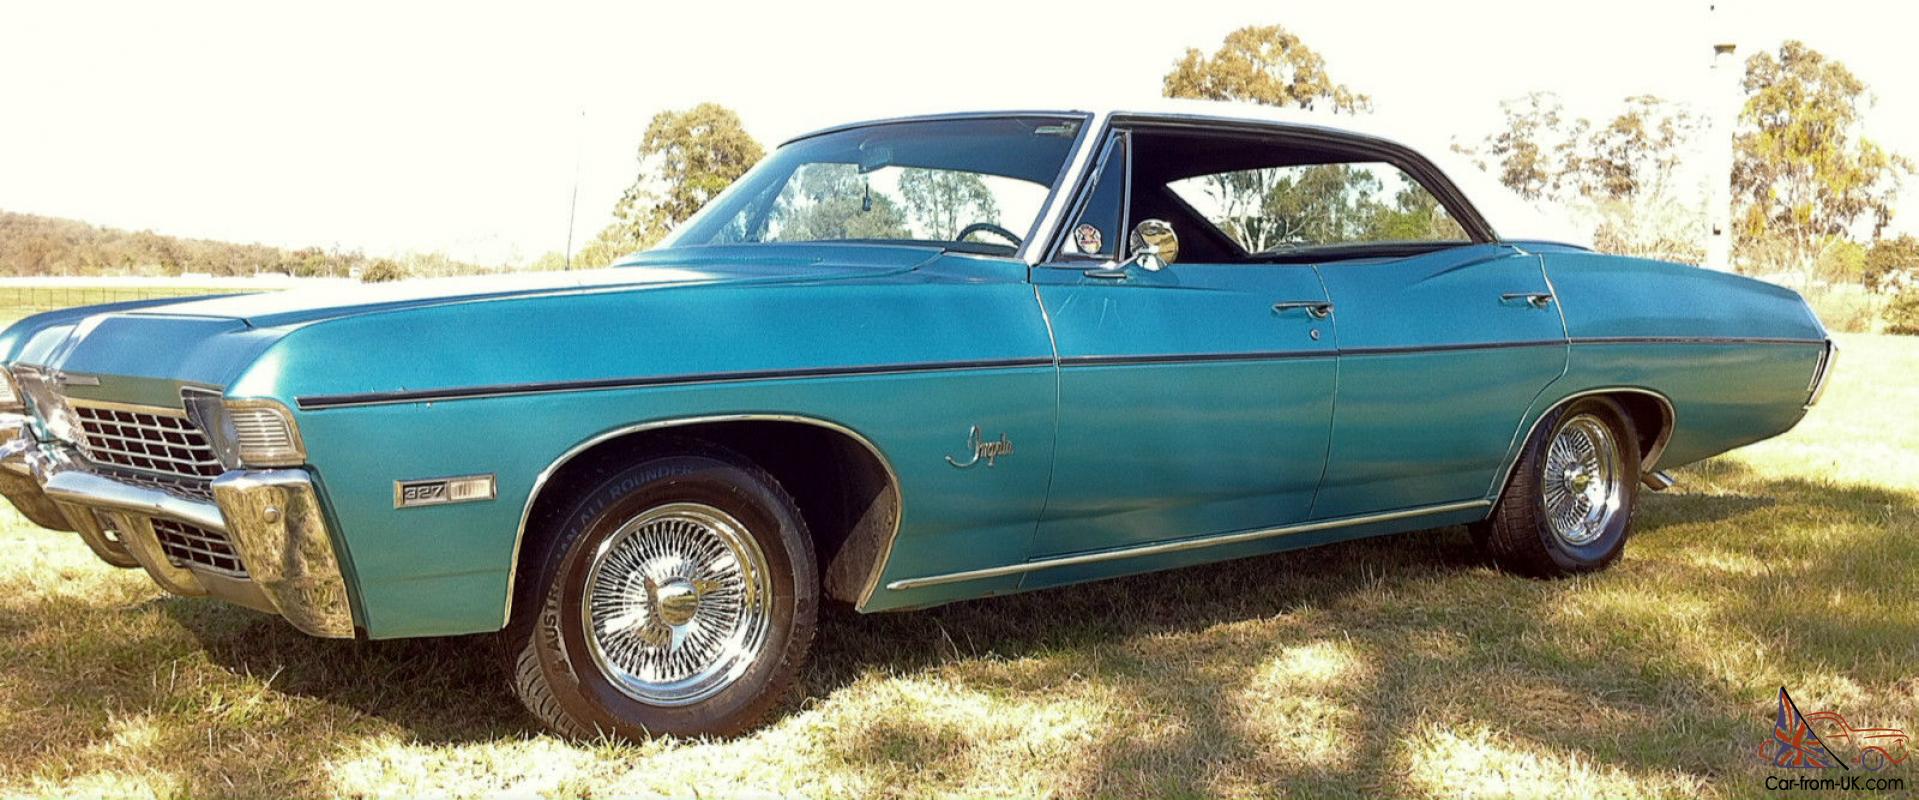 1968 Chevrolet Impala 4 Door Pillarless LHD